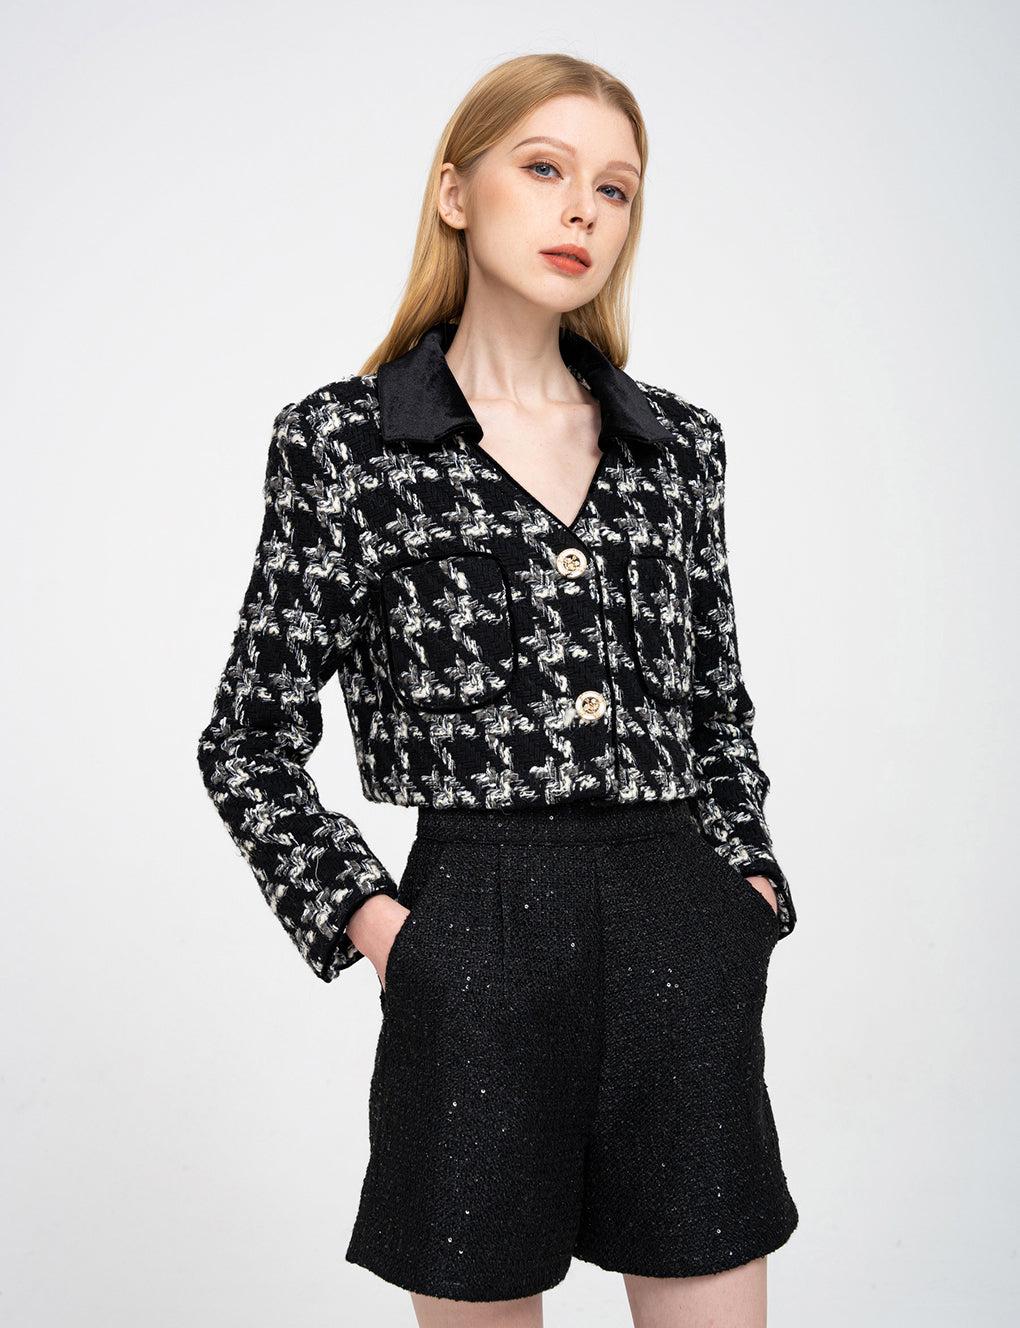 Sequin-embellished High-rise Tweed Shorts